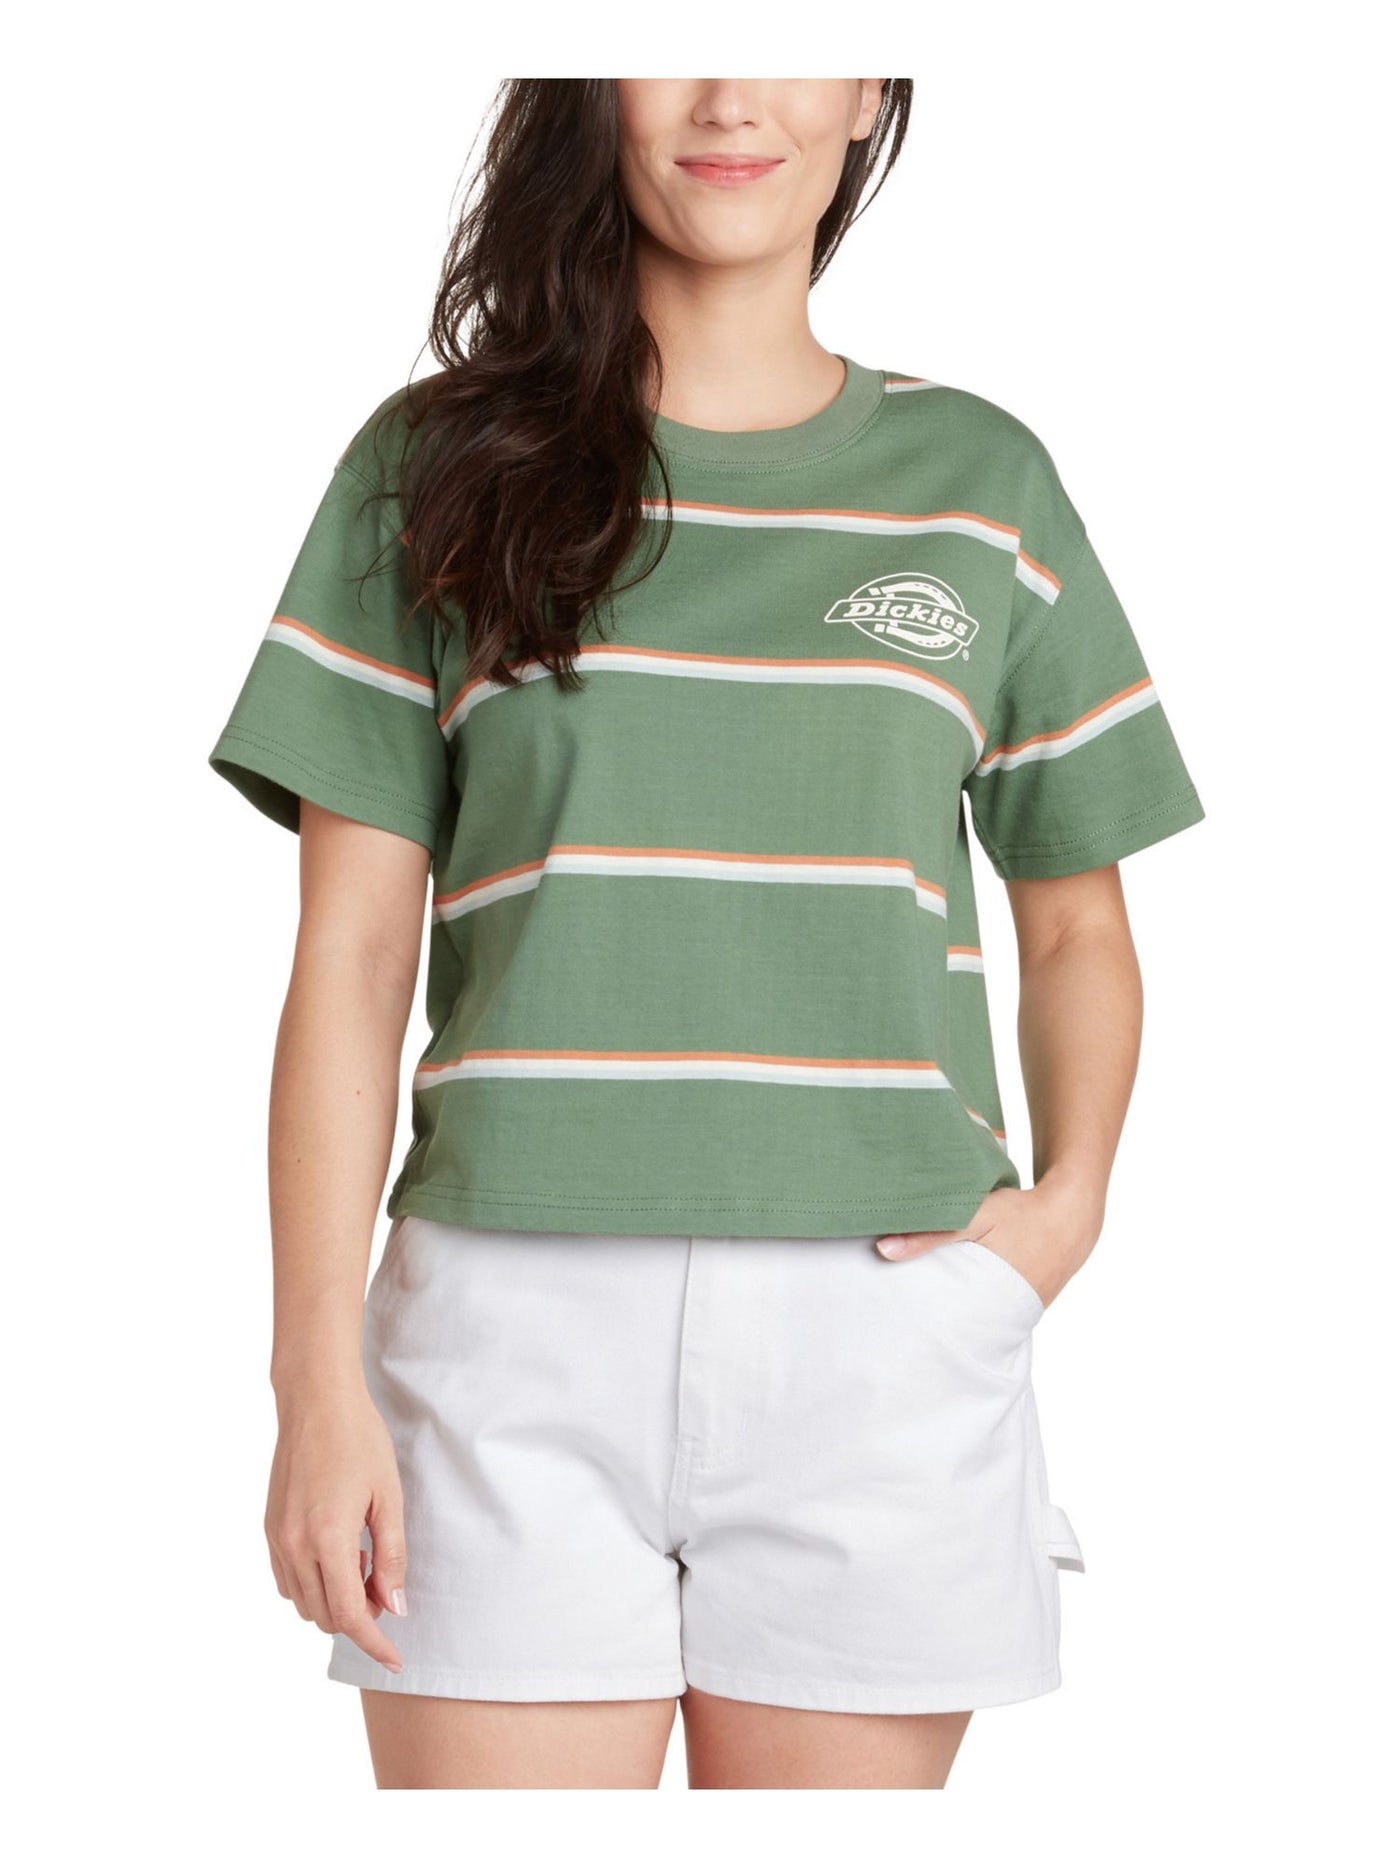 DICKIES Womens Green Ribbed Striped Short Sleeve Crew Neck T-Shirt Juniors L